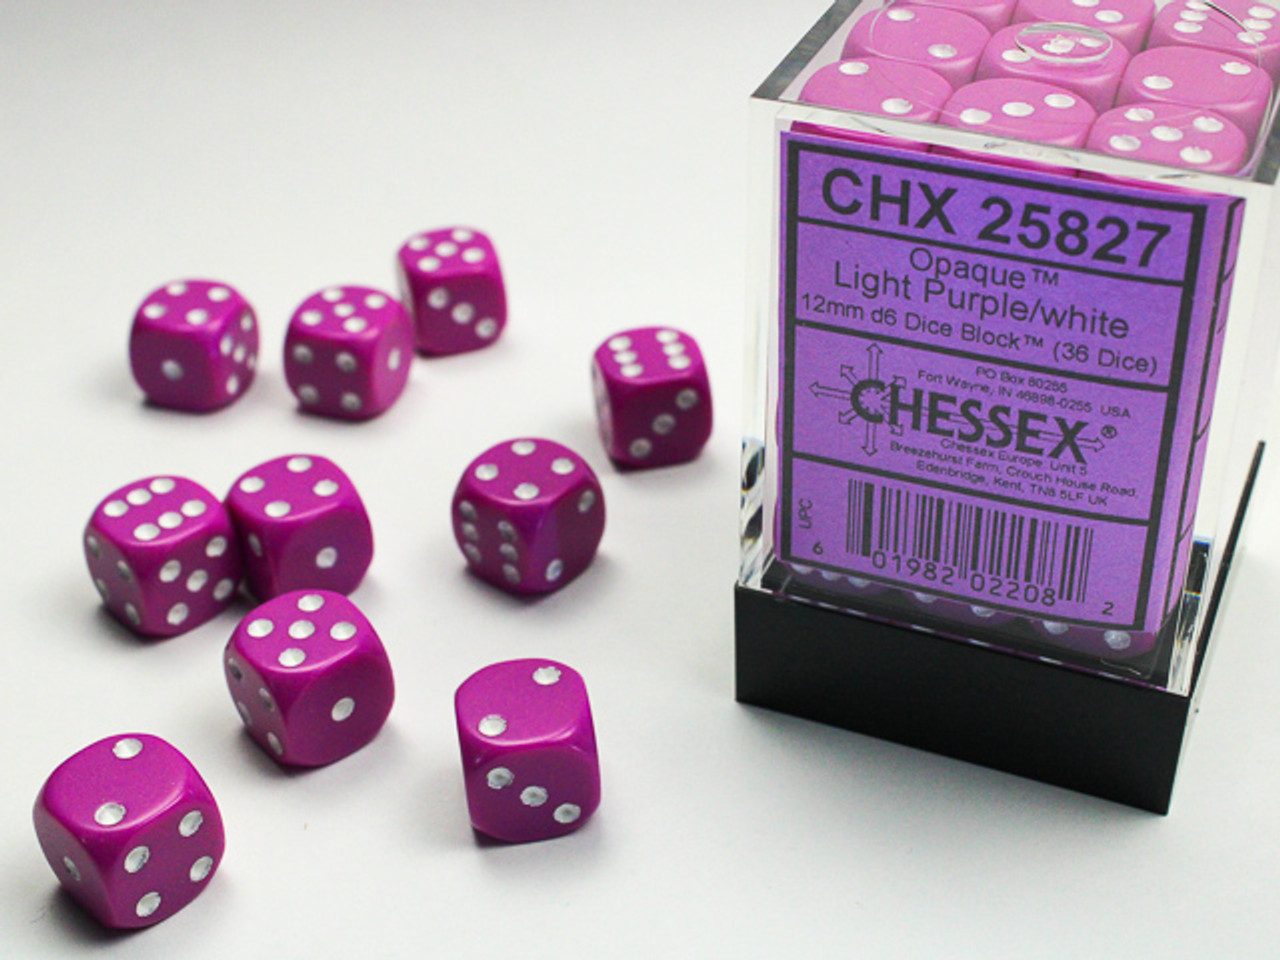 25827 - Opaque 12mm d6 Light Purple/white Dice Block™ (36 dice)